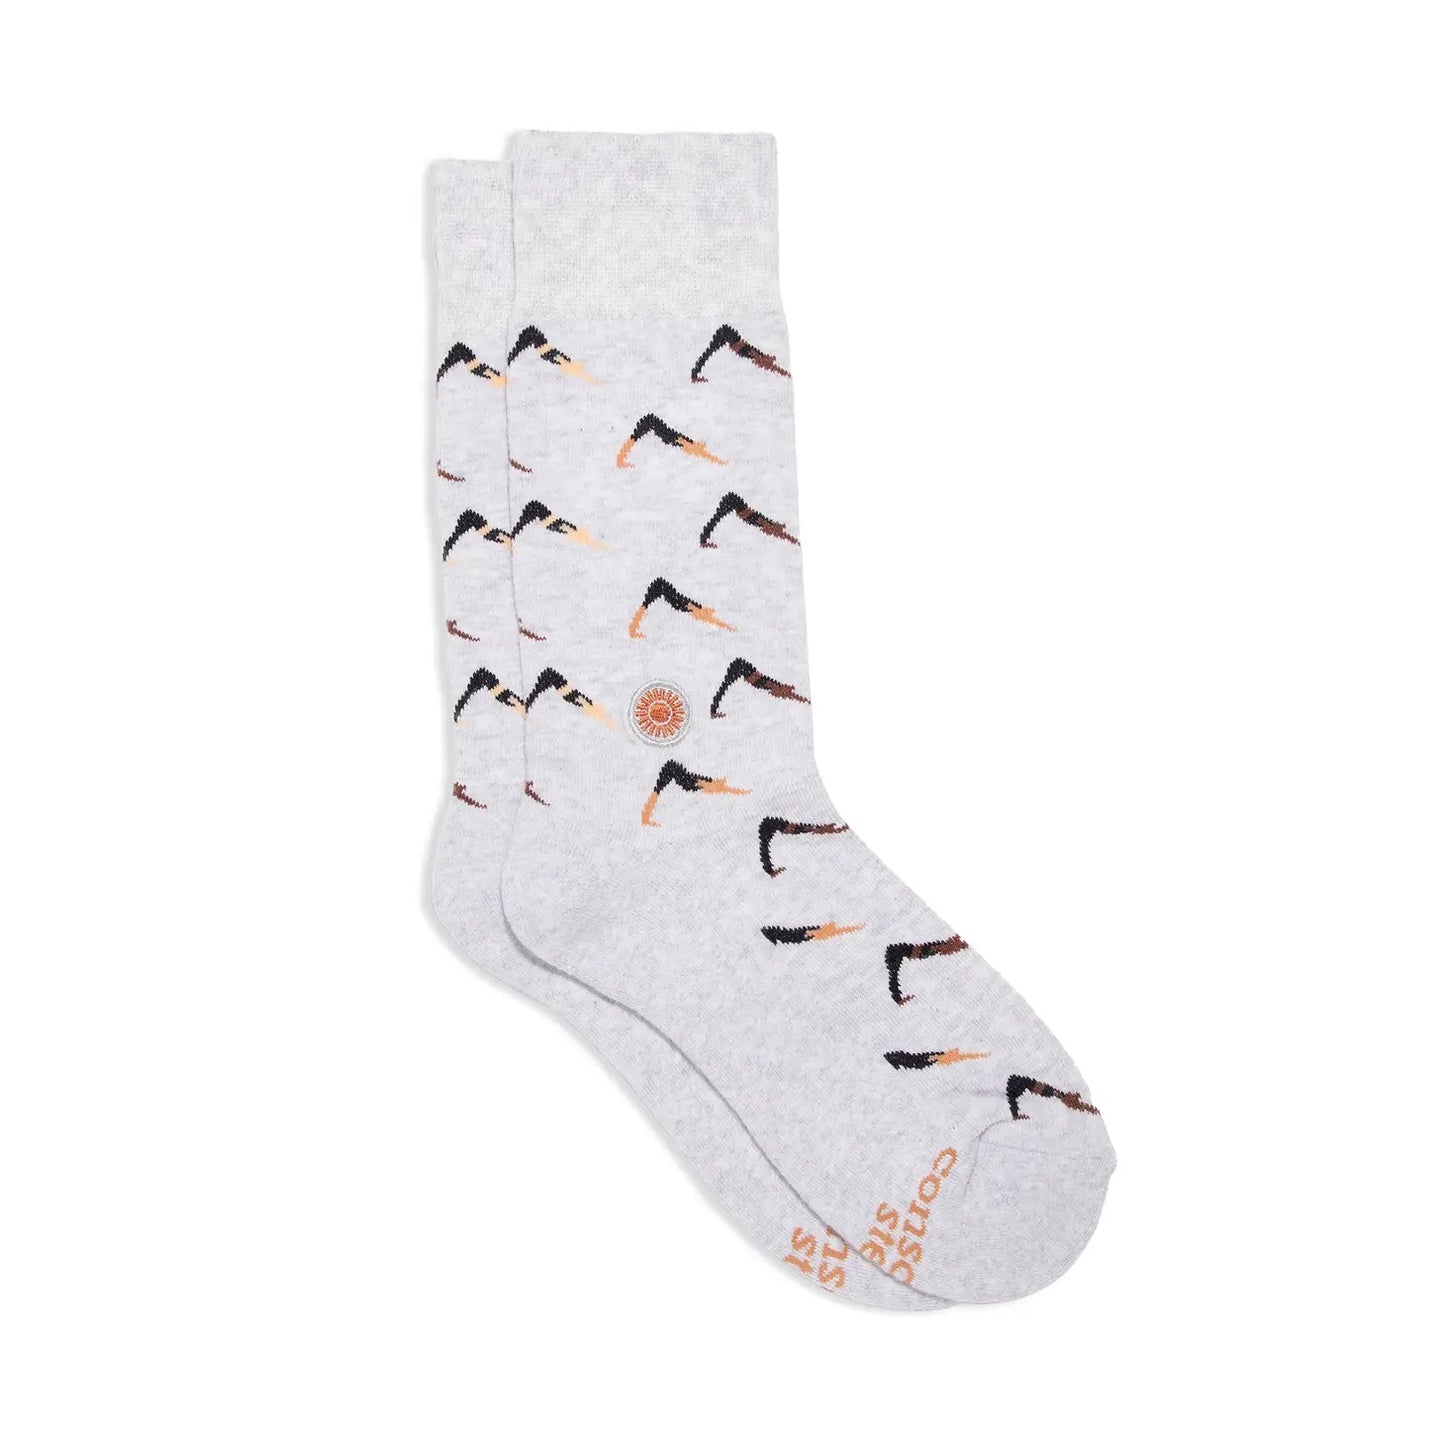 Conscious Step, Socks that Support Mental Health - Yoga Pose - Boutique Dandelion